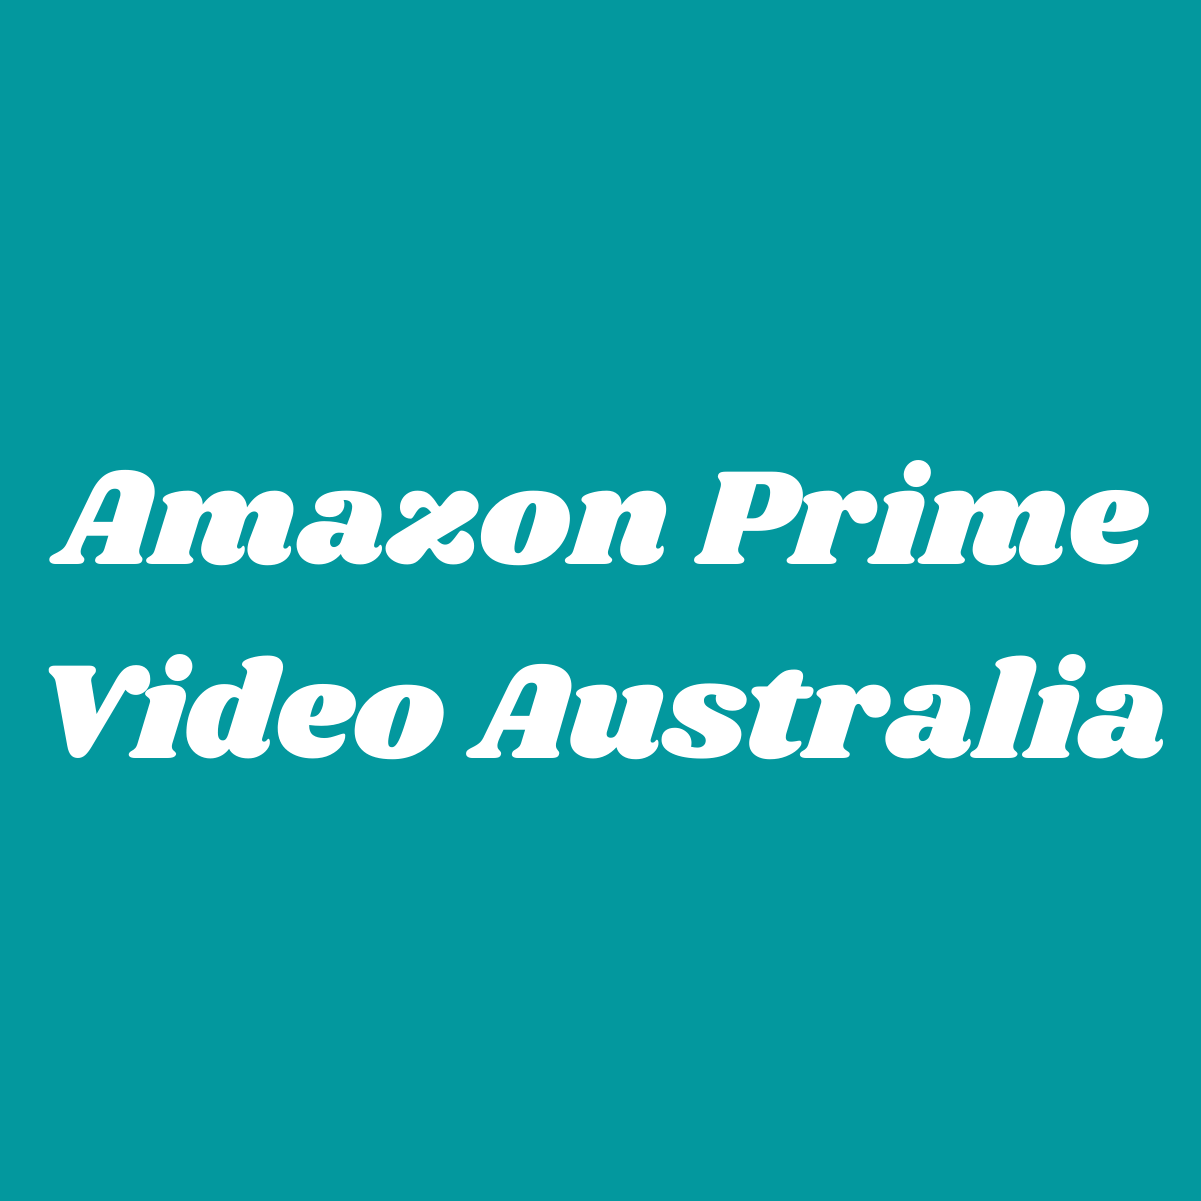 Amazon Prime Video Australia 2022 – What Should You Know